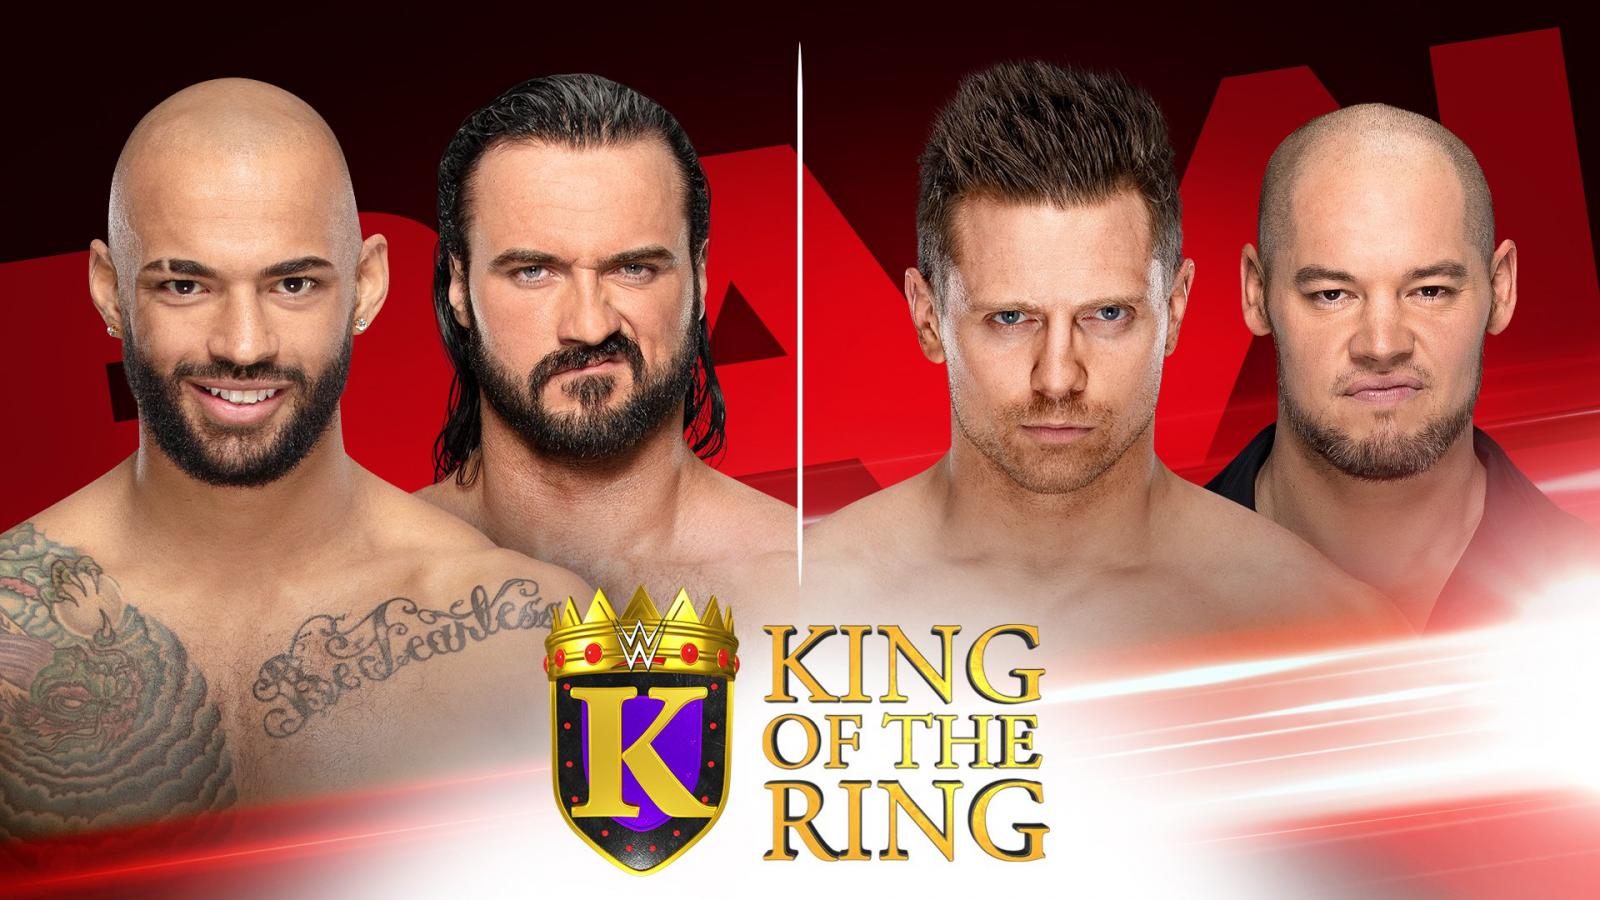 Drew McIntyre vs. Ricochet and The Miz vs. Baron Corbin - WWE King Of The Ring 2019 Tournament